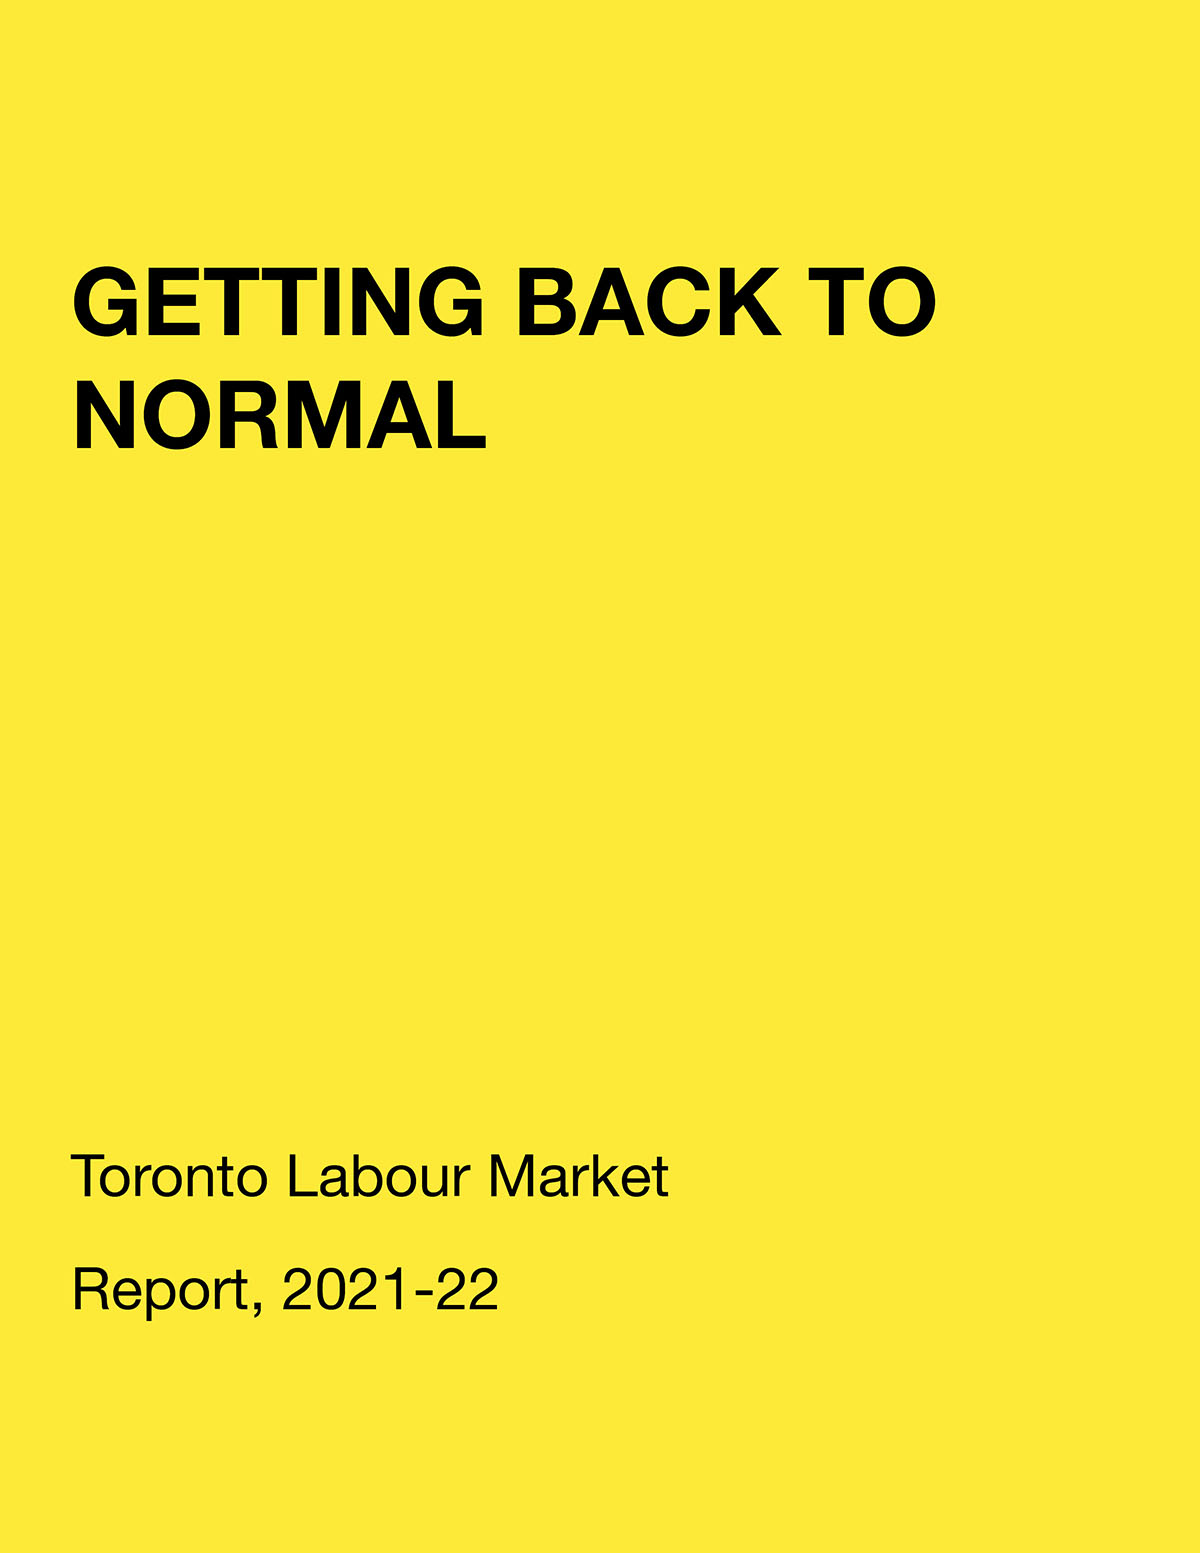 Toronto Labour Market Report 2021-22